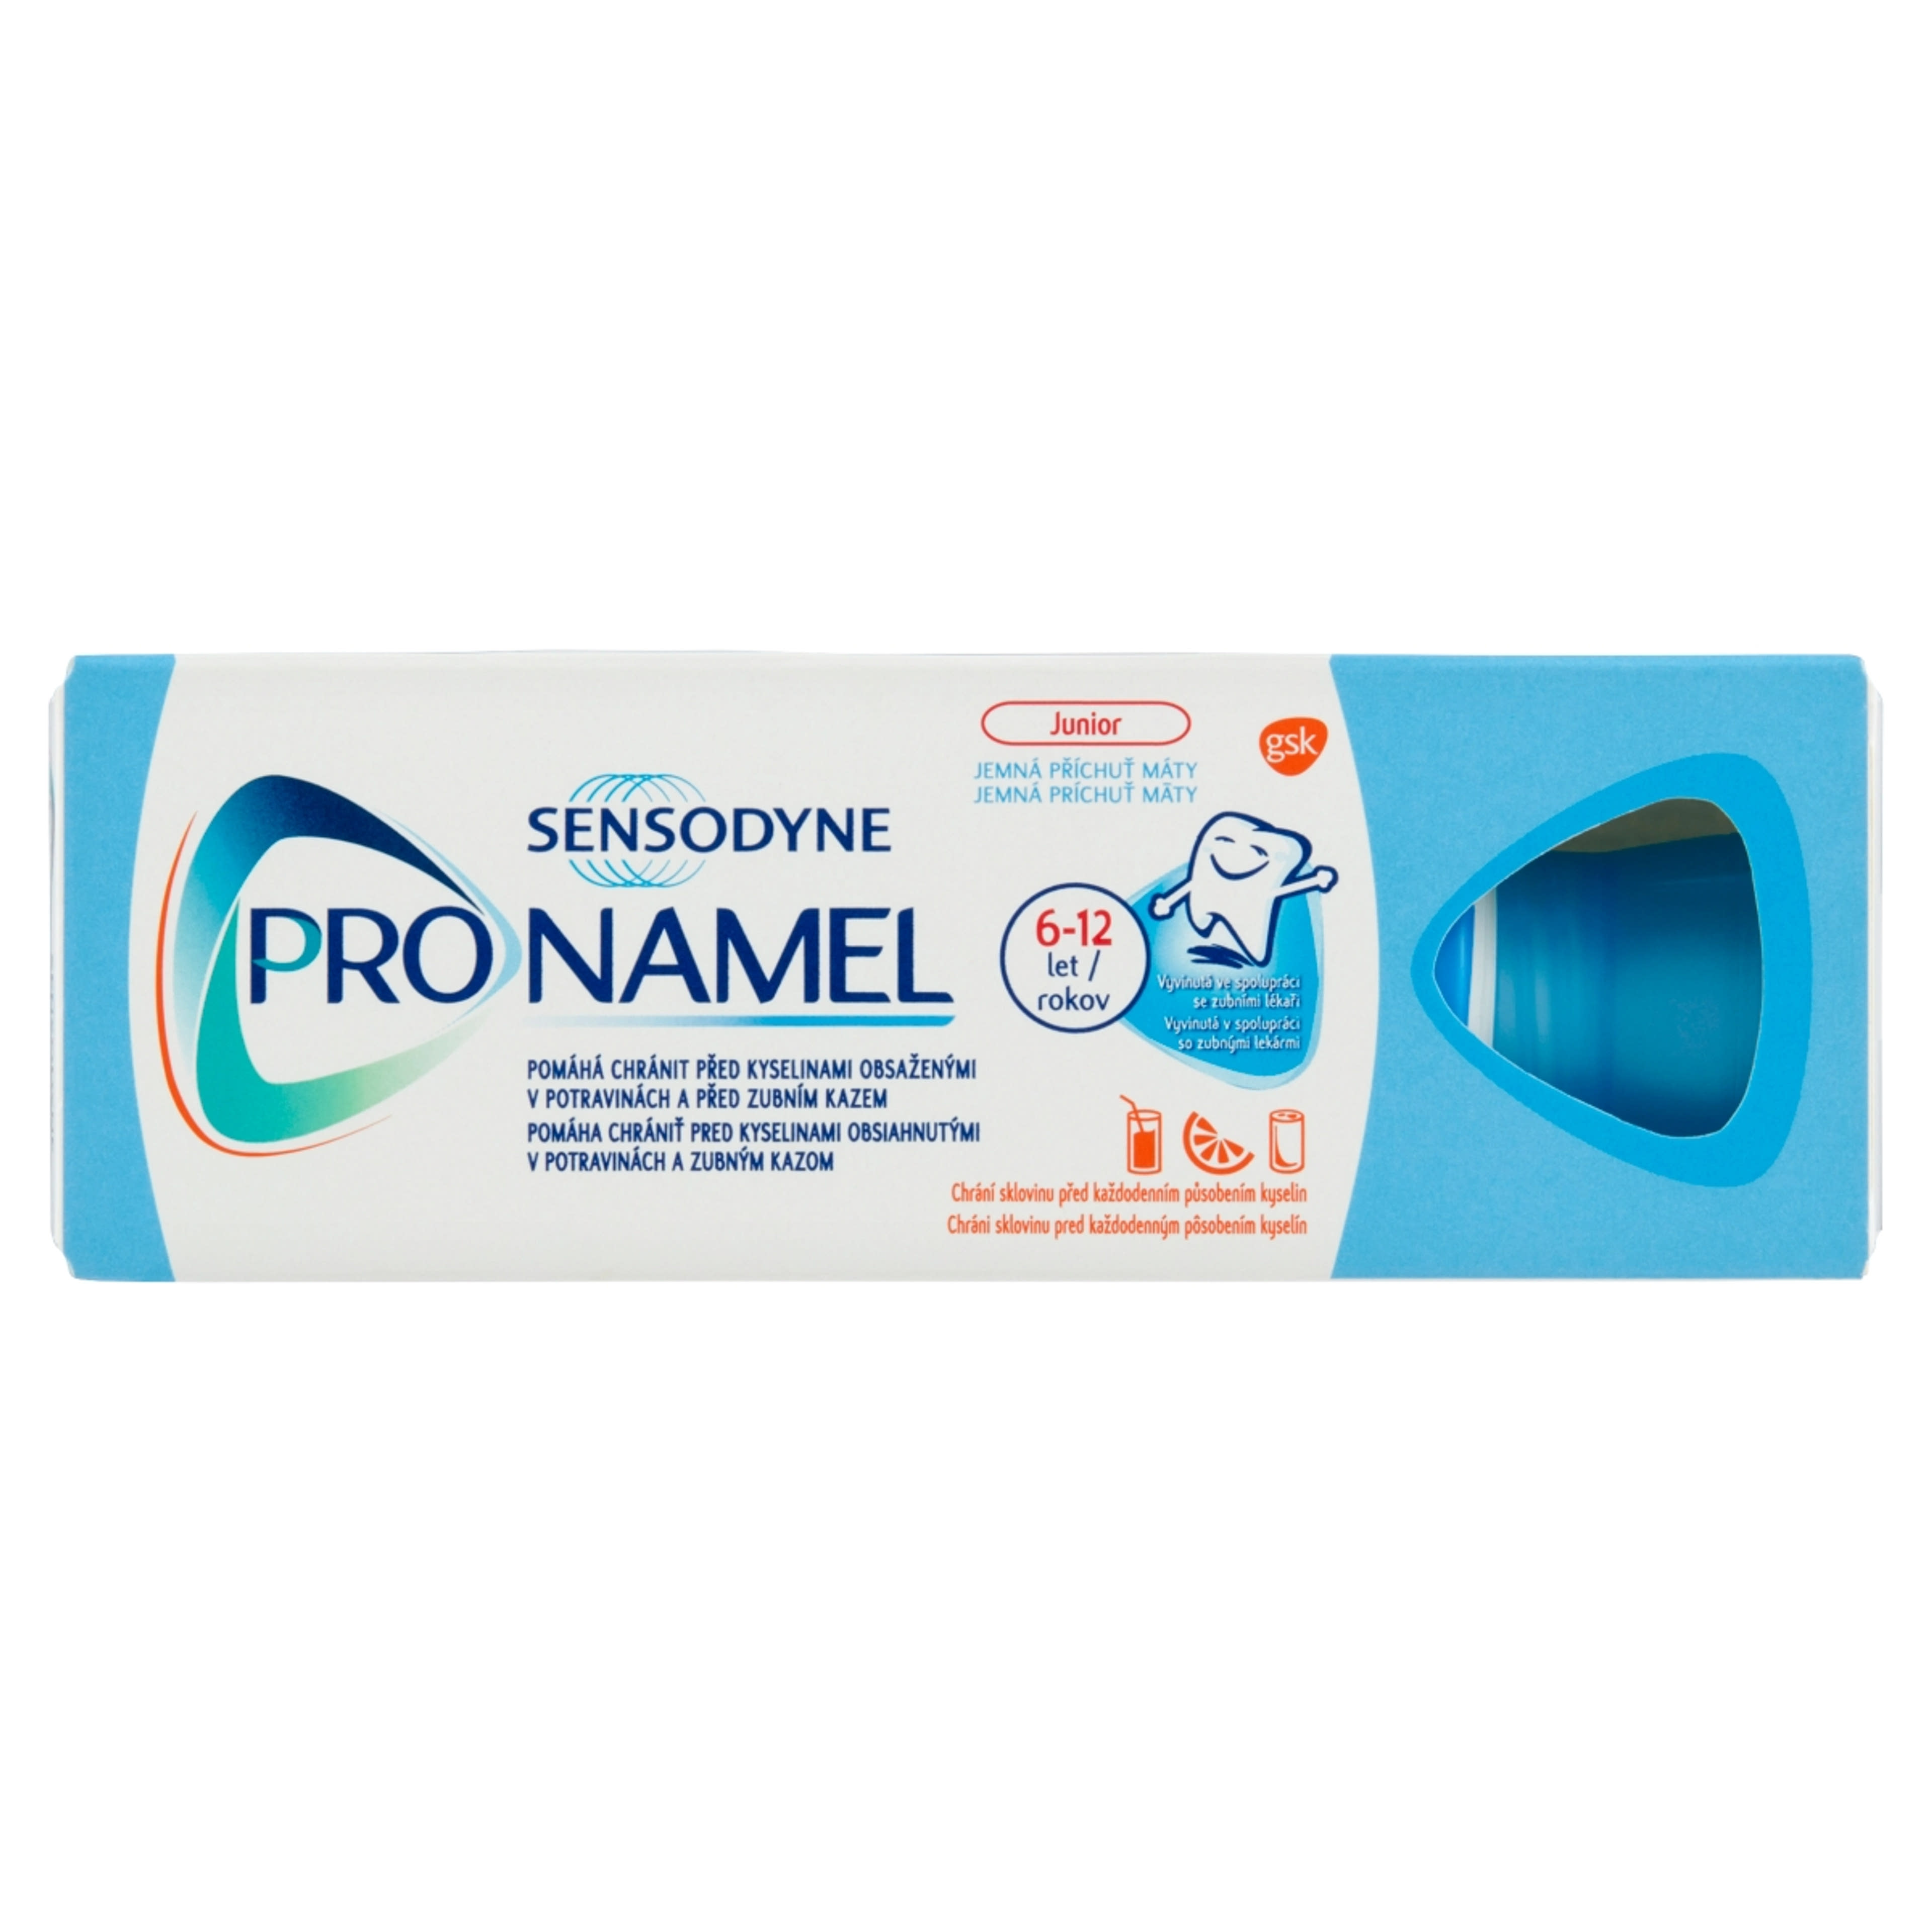 Sensodyne Pronamel Junior fogkrém - 50 ml